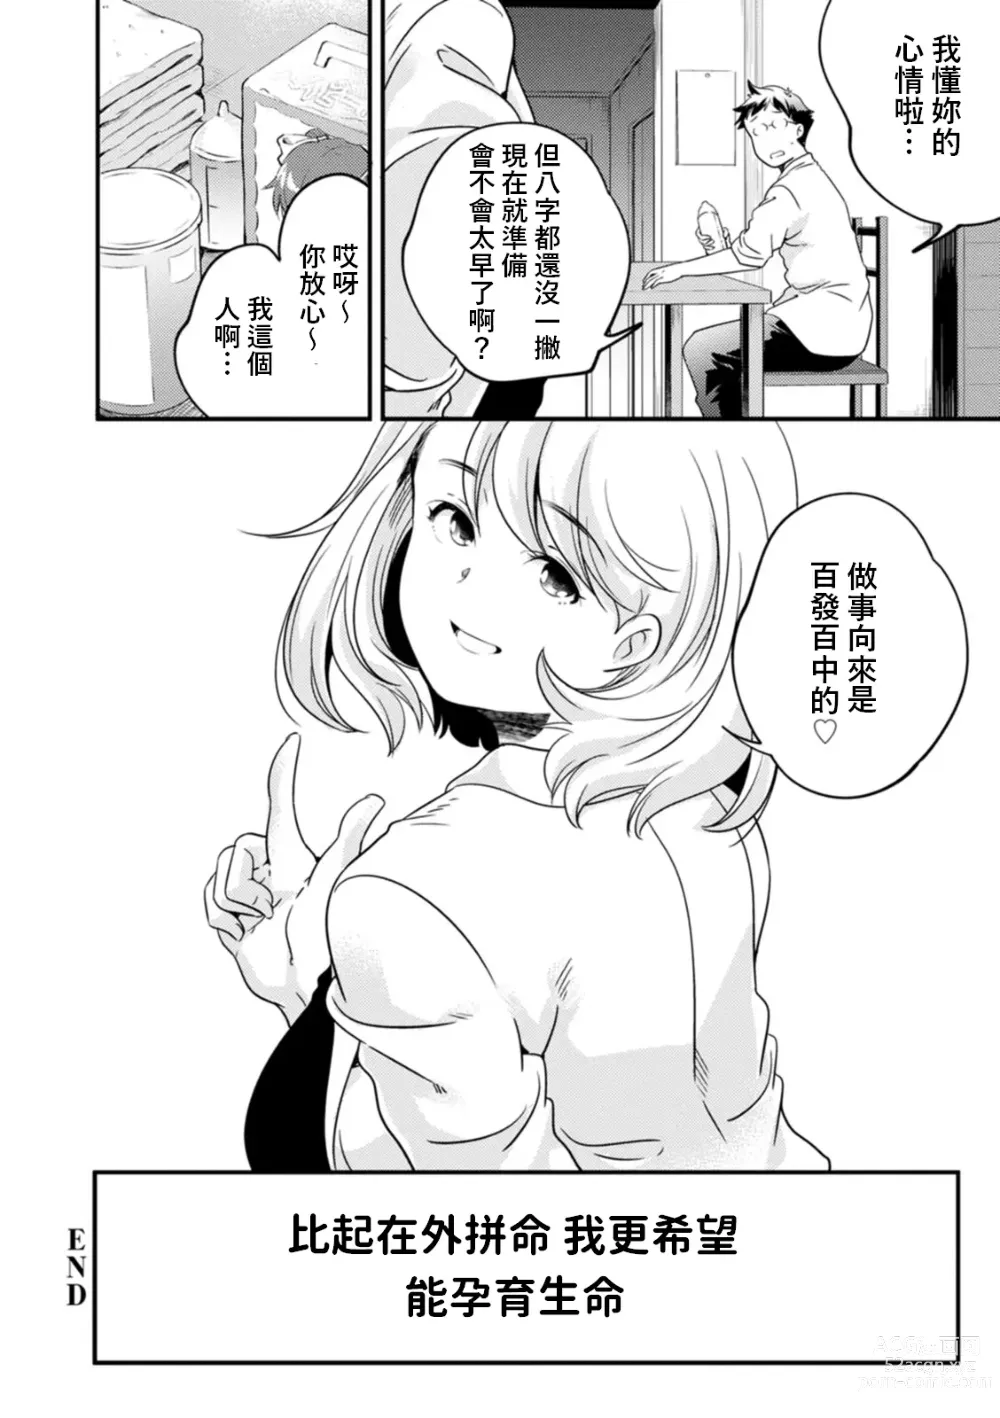 Page 20 of manga Full Metal Mama